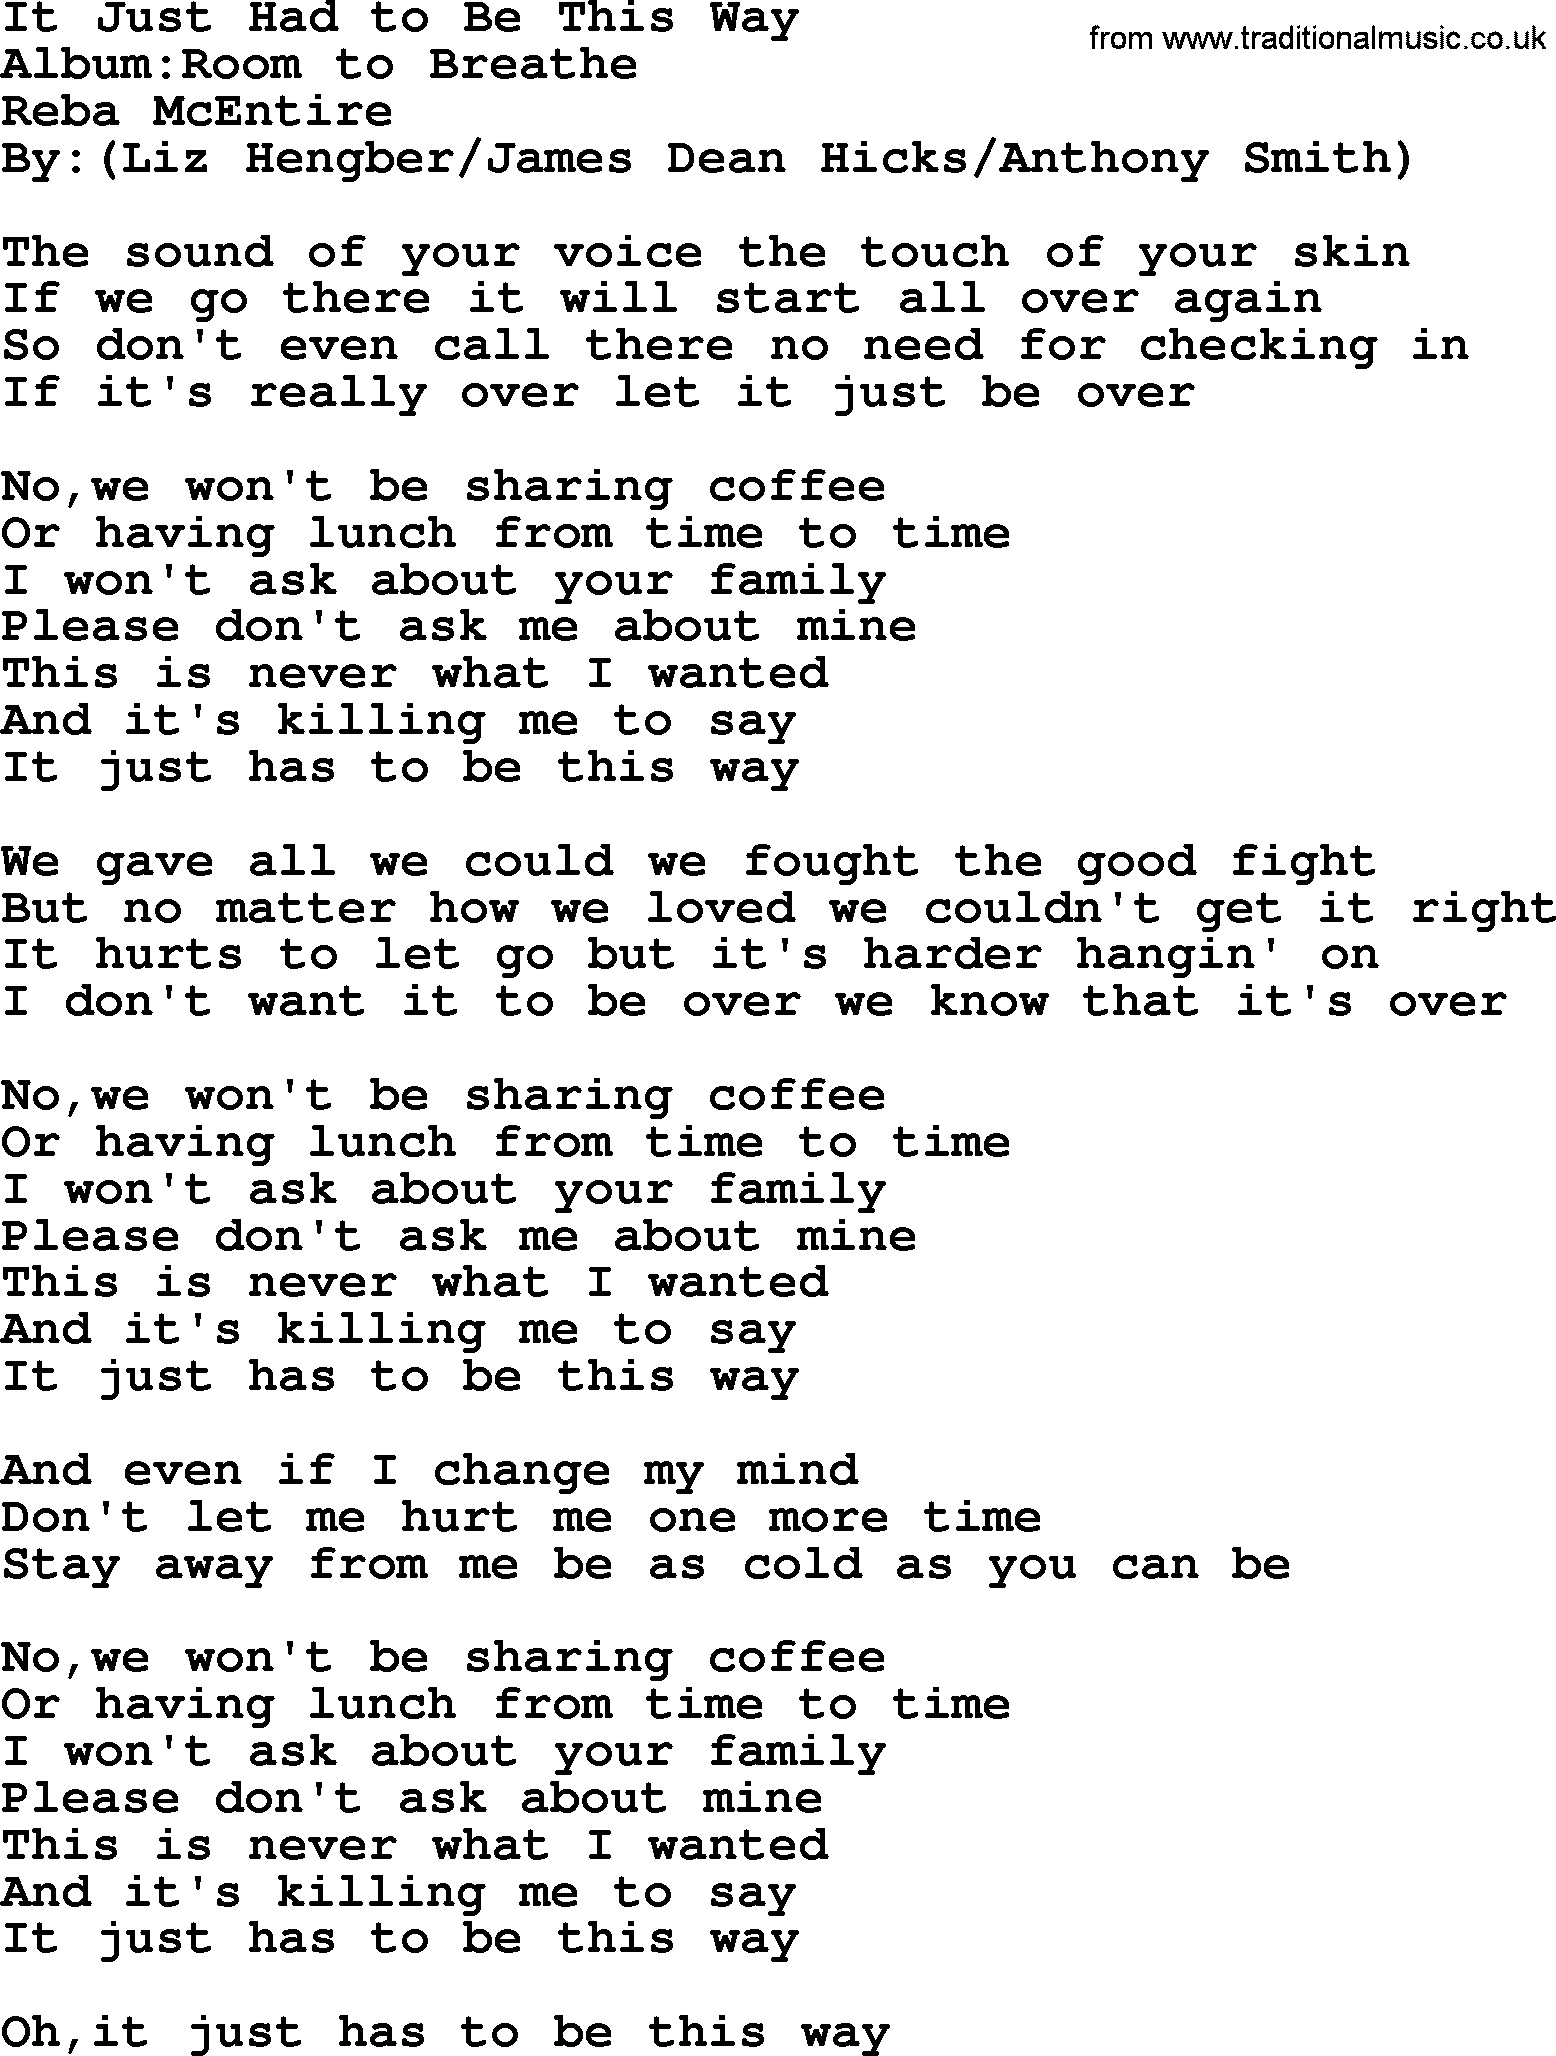 Reba McEntire song: It Just Had to Be This Way lyrics